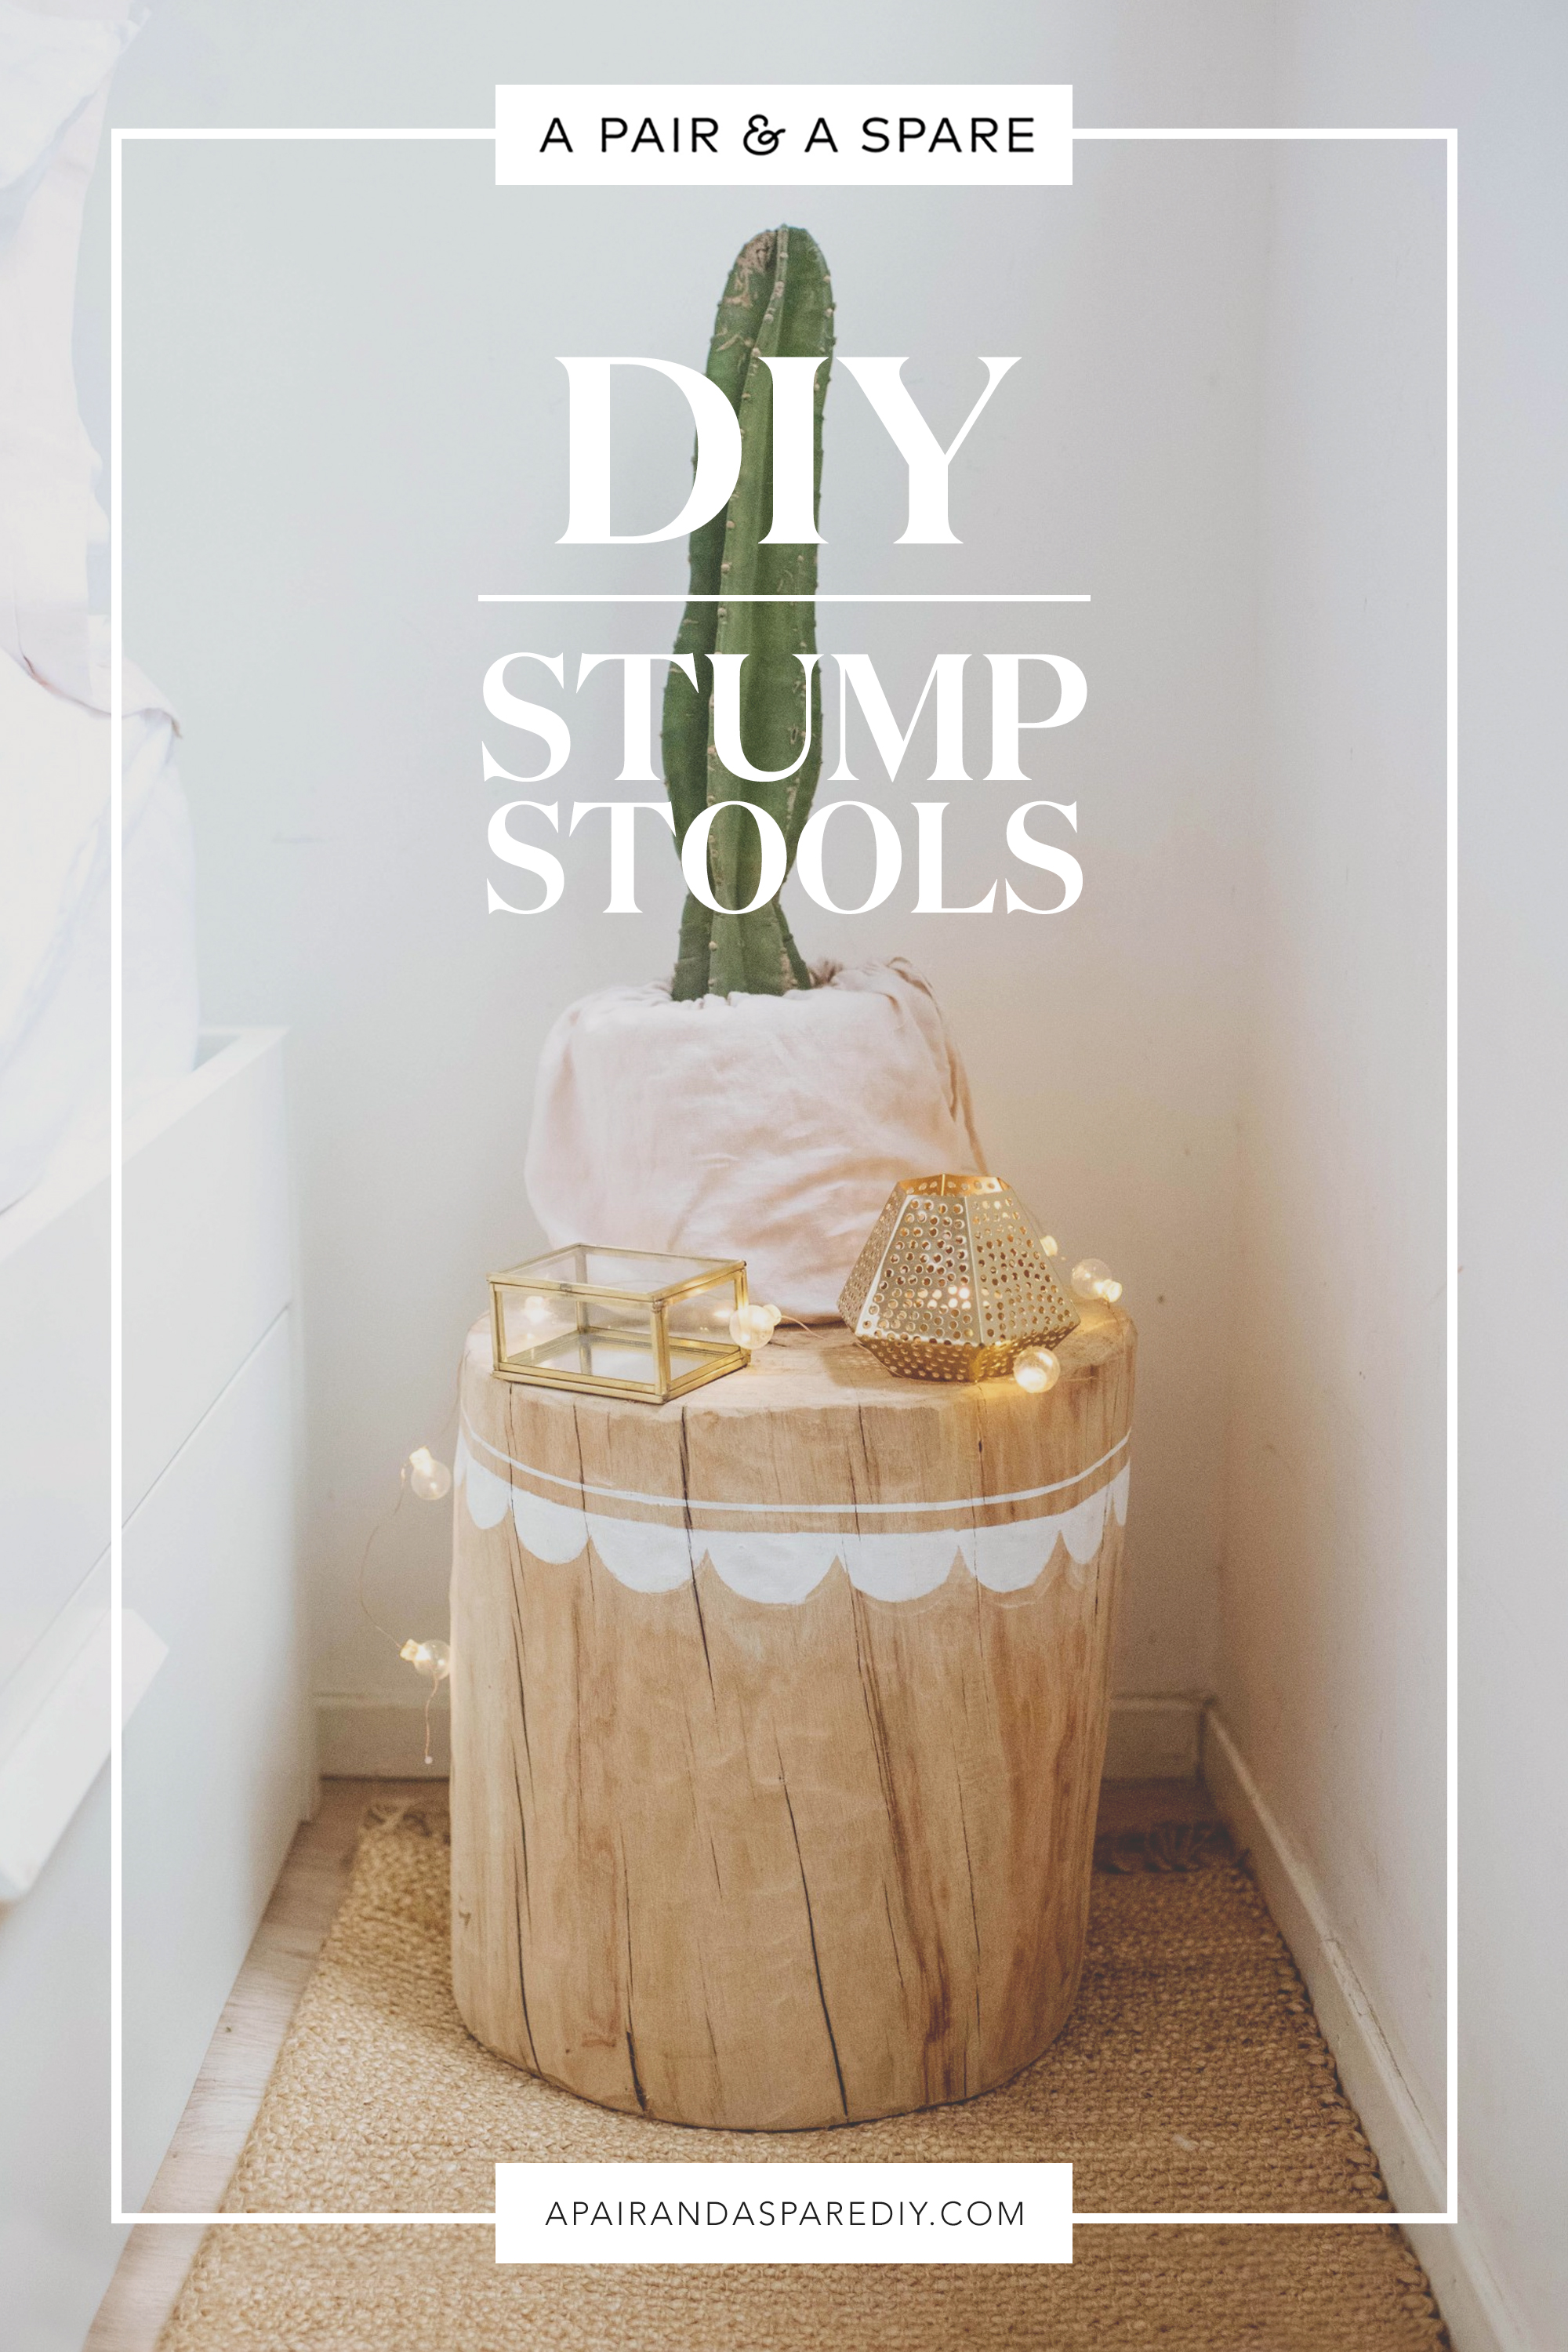 DIY Stump Stools